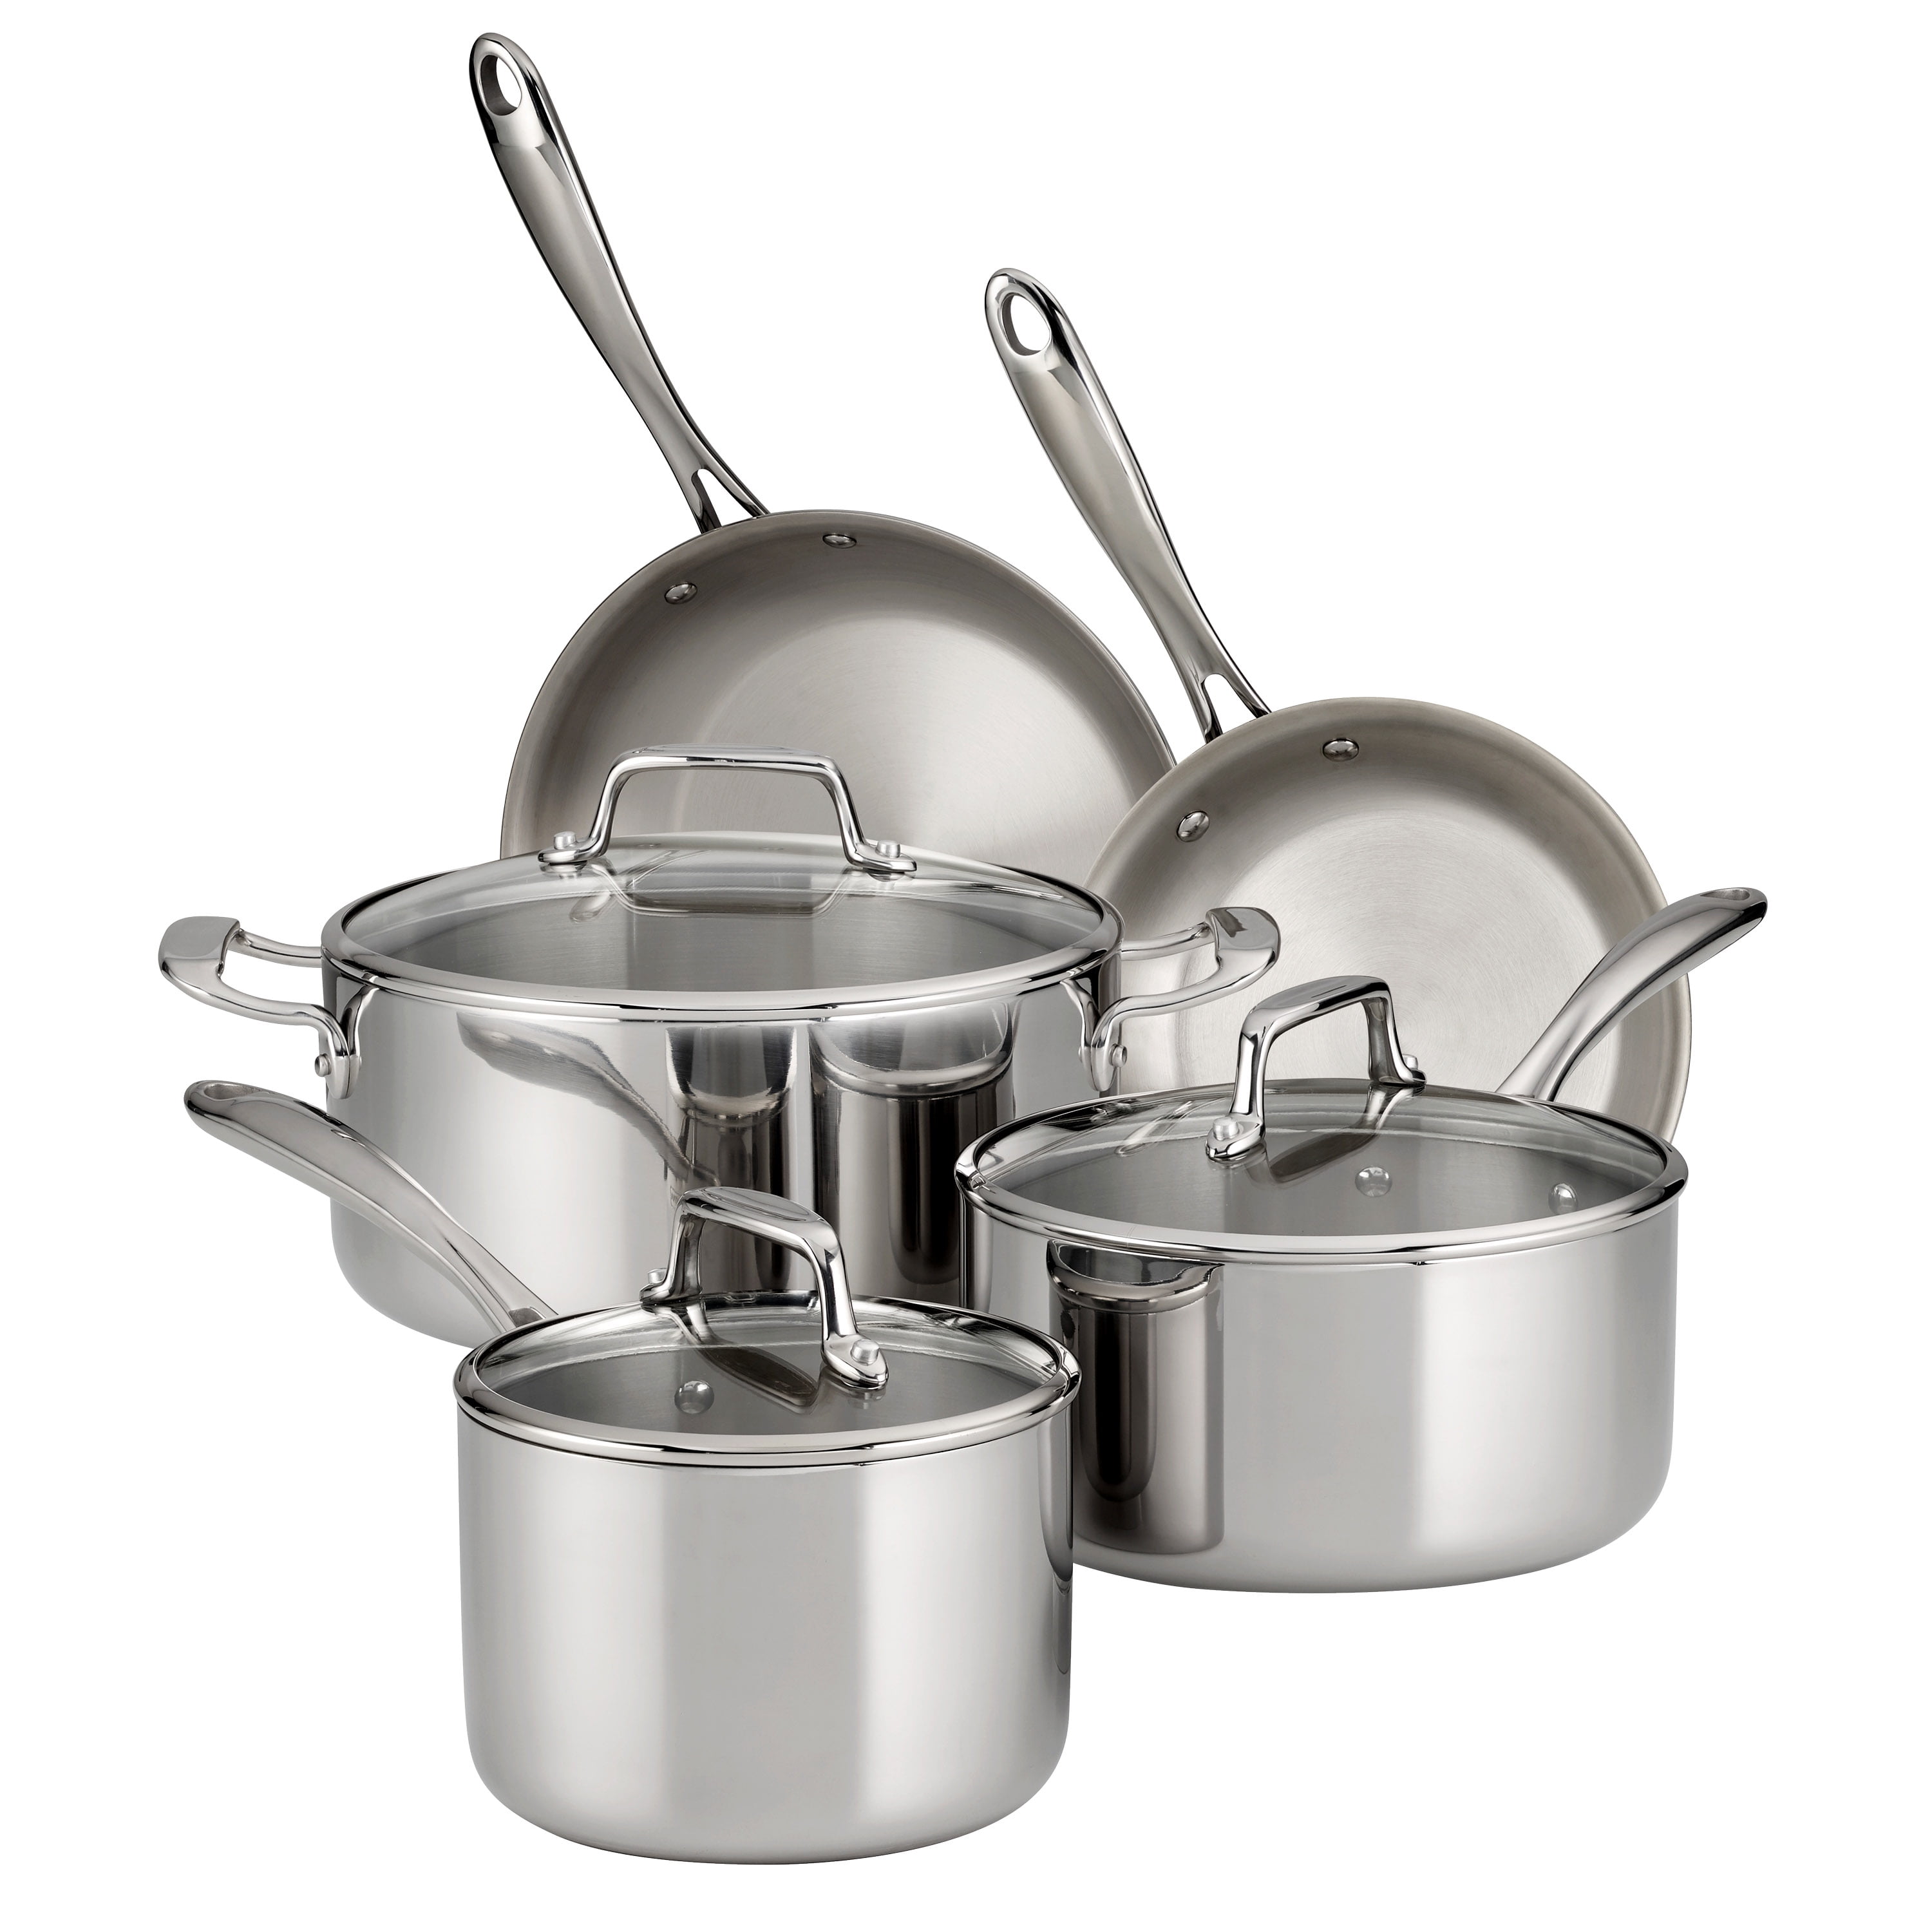 Set Of 12 Stainless Steel Kitchen Cooking Pots Set Glass Lid Saucepan Frying Pan 